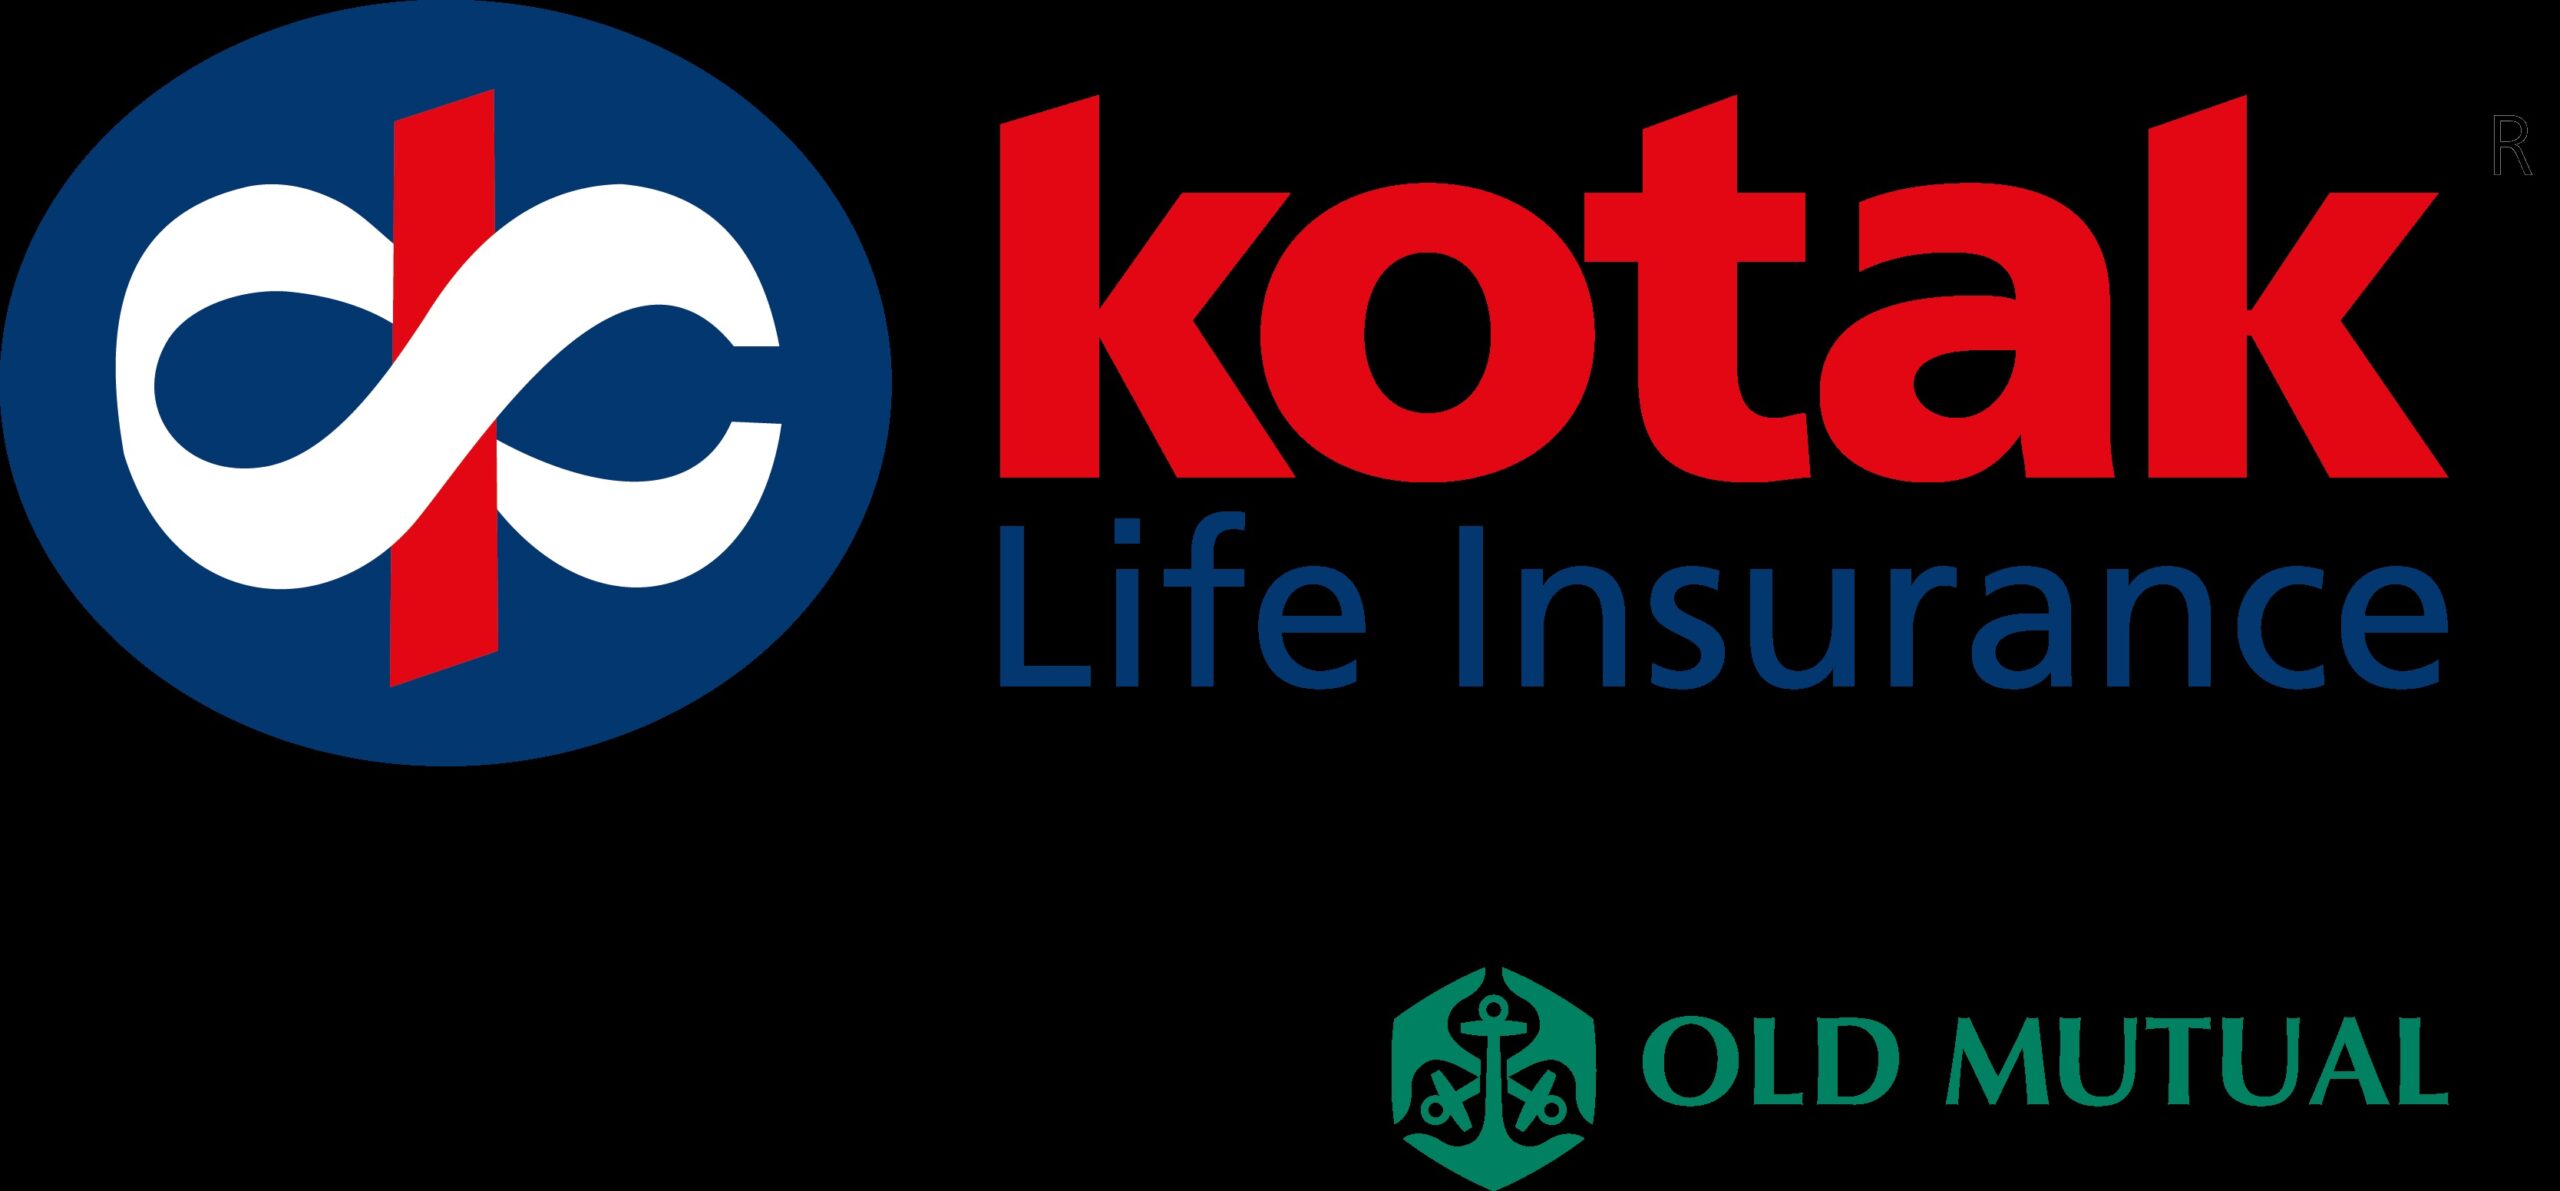 Kotak Life Insurance png images | PNGWing